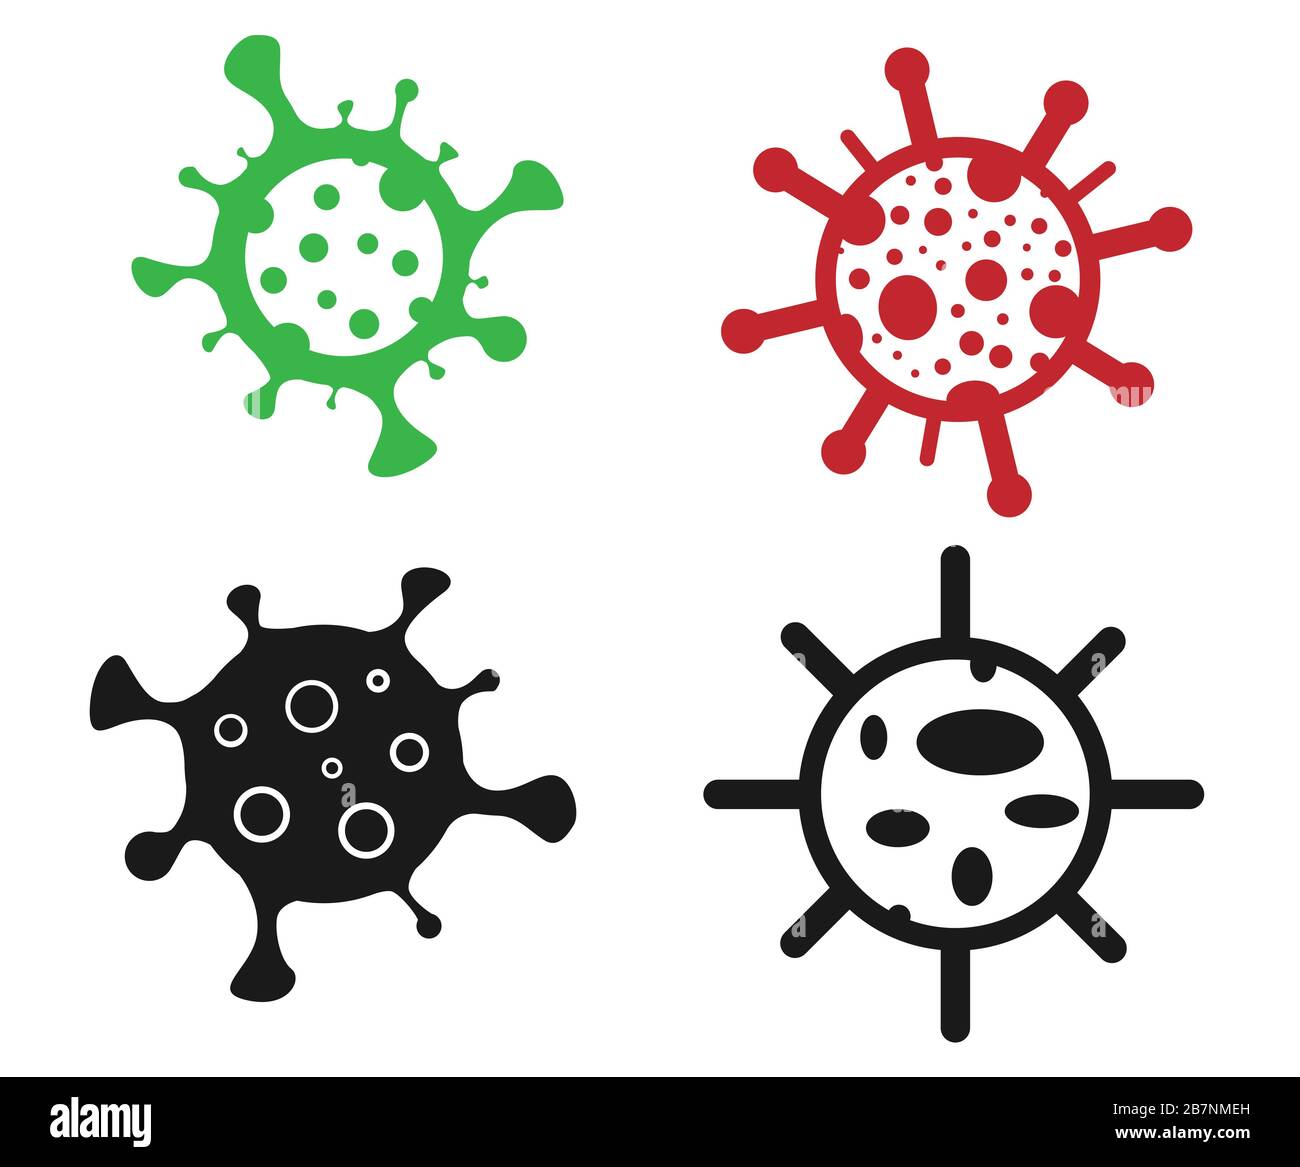 simple virus icons, vector illustration Stock Photo